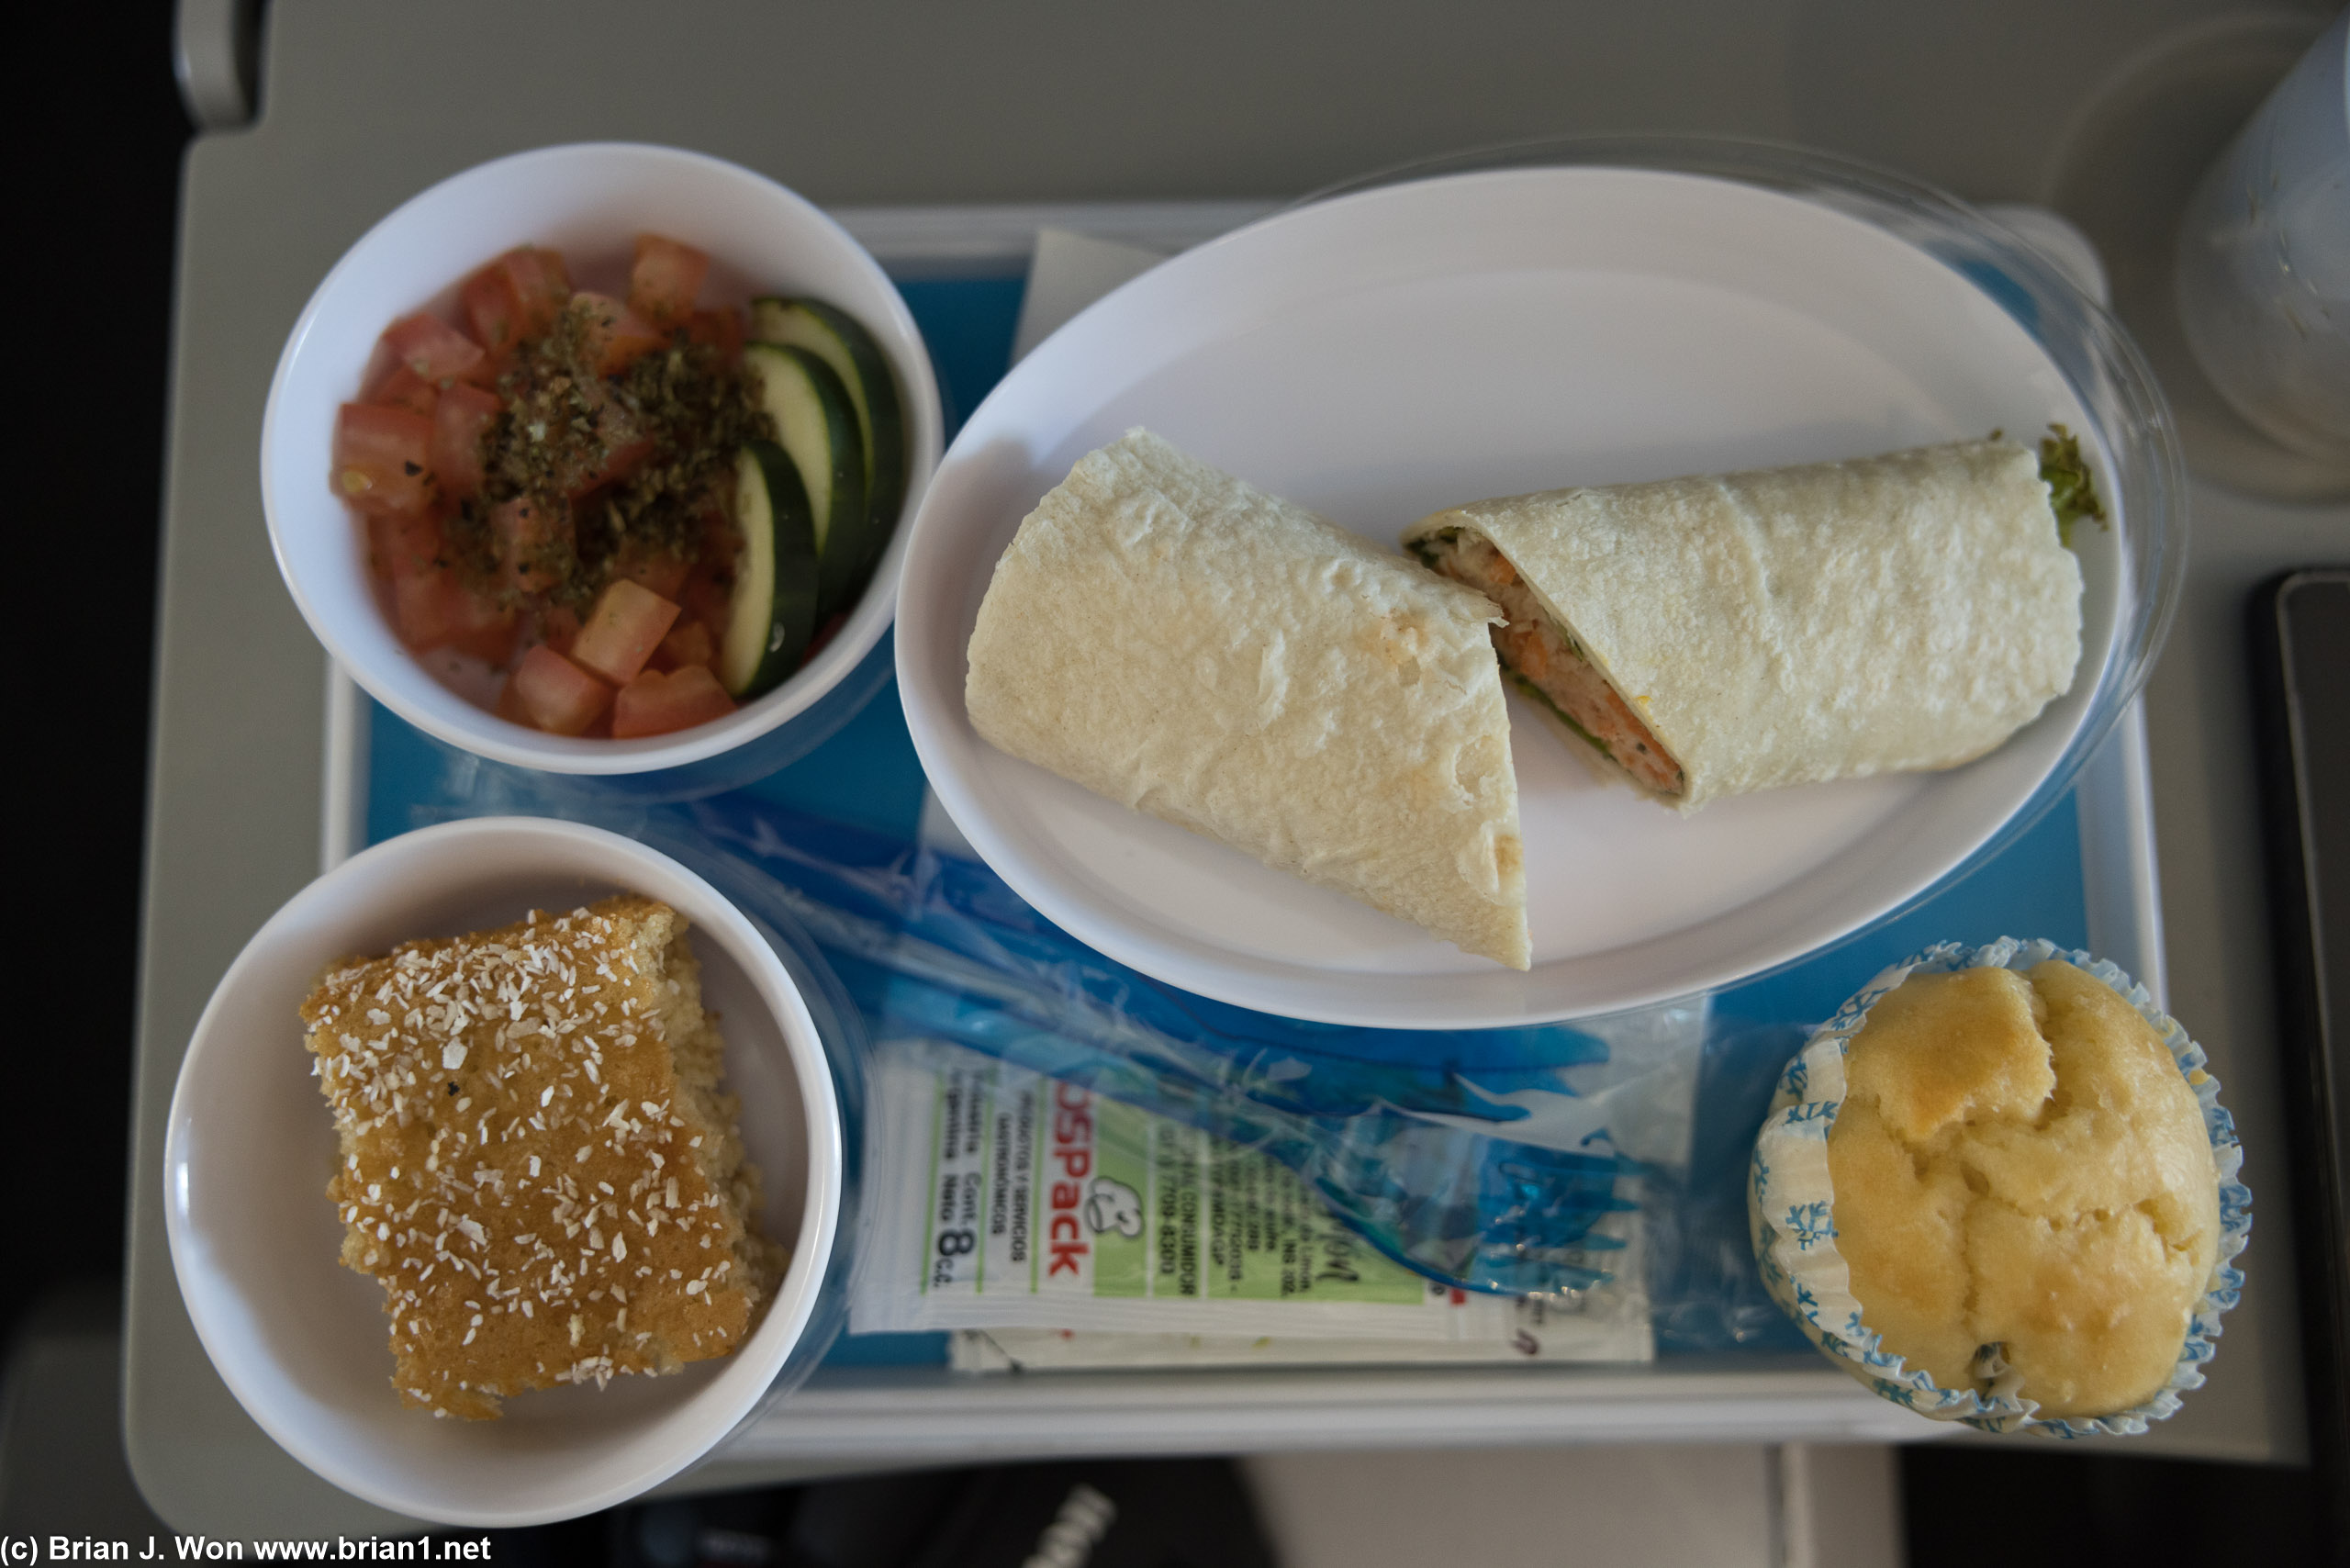 Food on Aerolineas Argentinas is just as inedible as United.